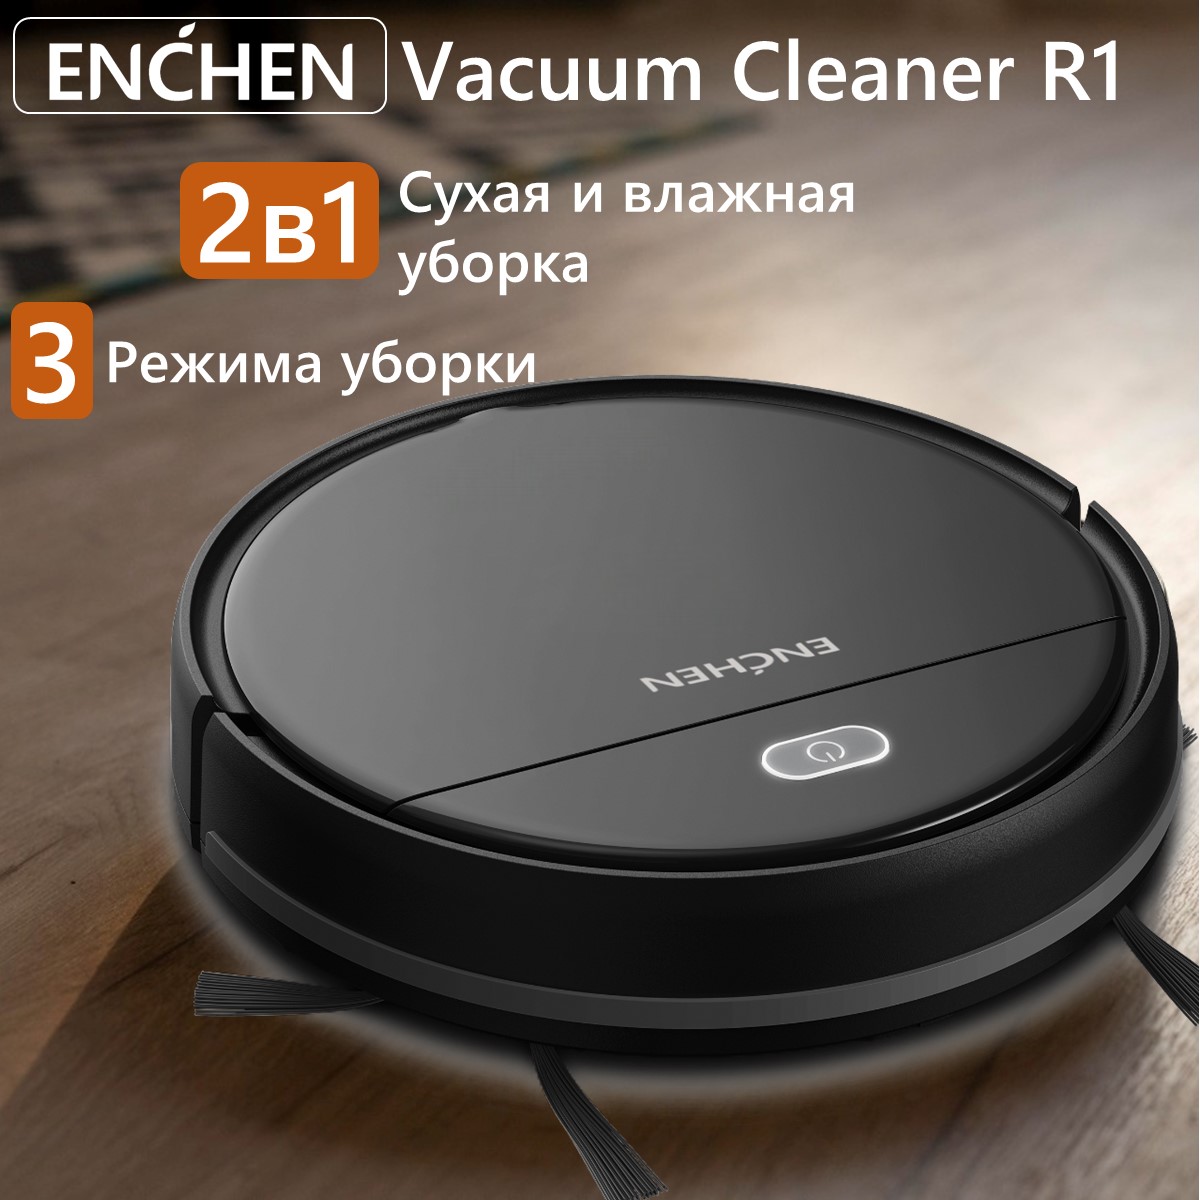 Робот-пылесос ENCHEN Vacuum Cleaner R1 черный робот пылесос xiaomi vacuum cleaner pro mjsts1